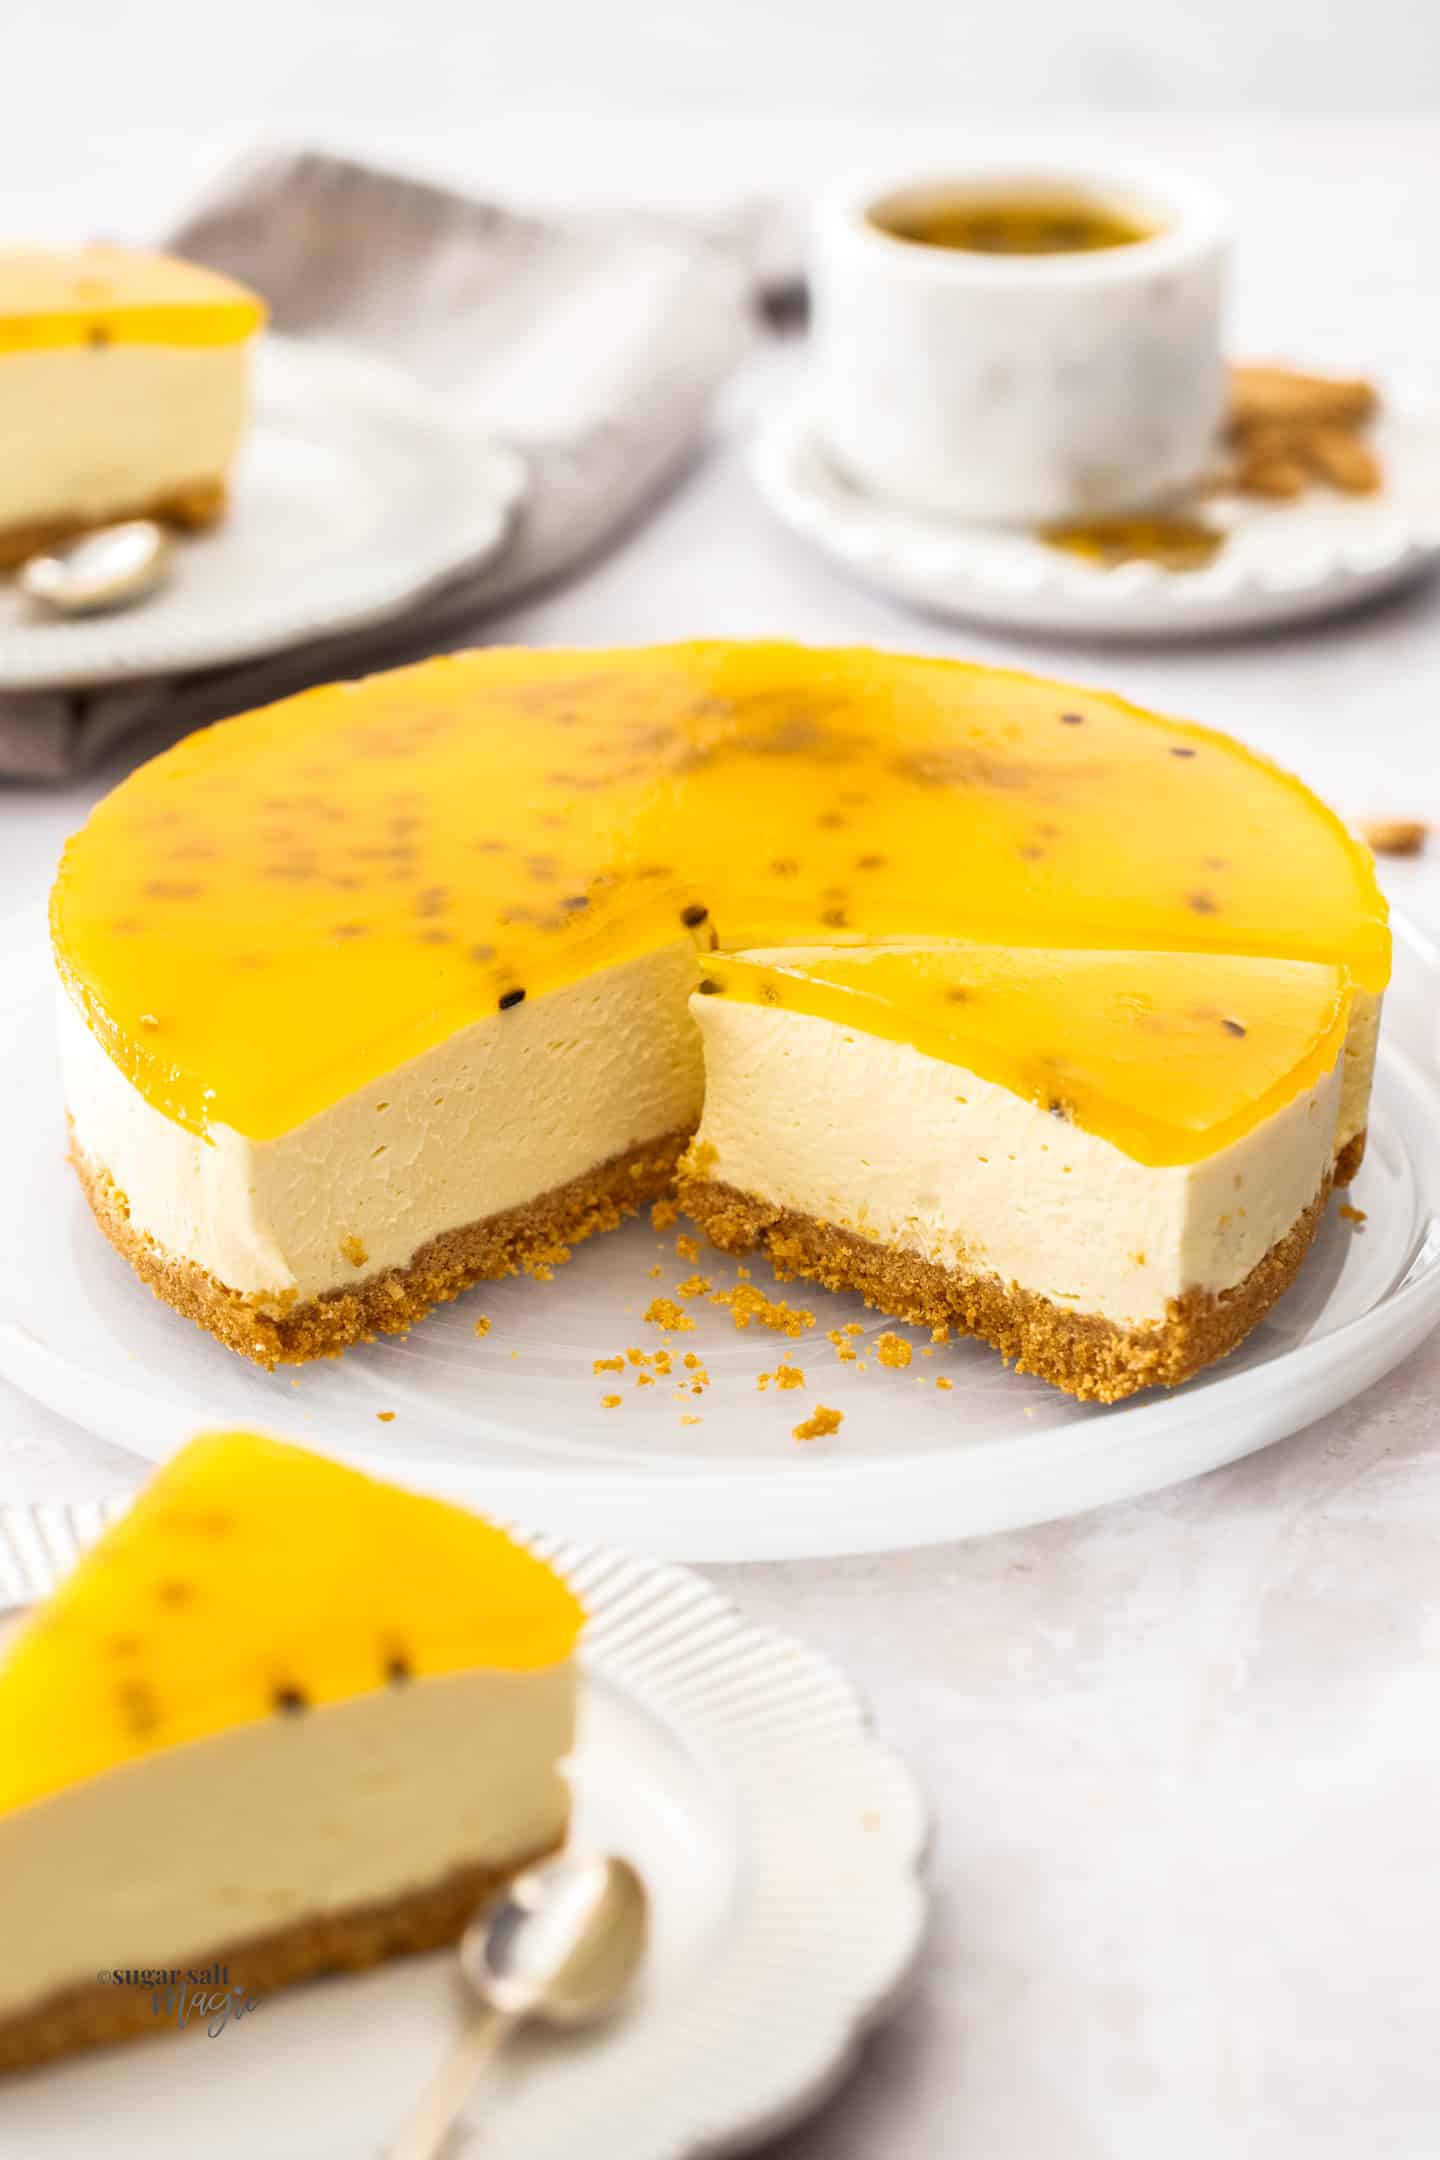 https://www.sugarsaltmagic.com/wp-content/uploads/2021/12/No-Bake-Passionfruit-Cheesecake-2FEAT.jpg